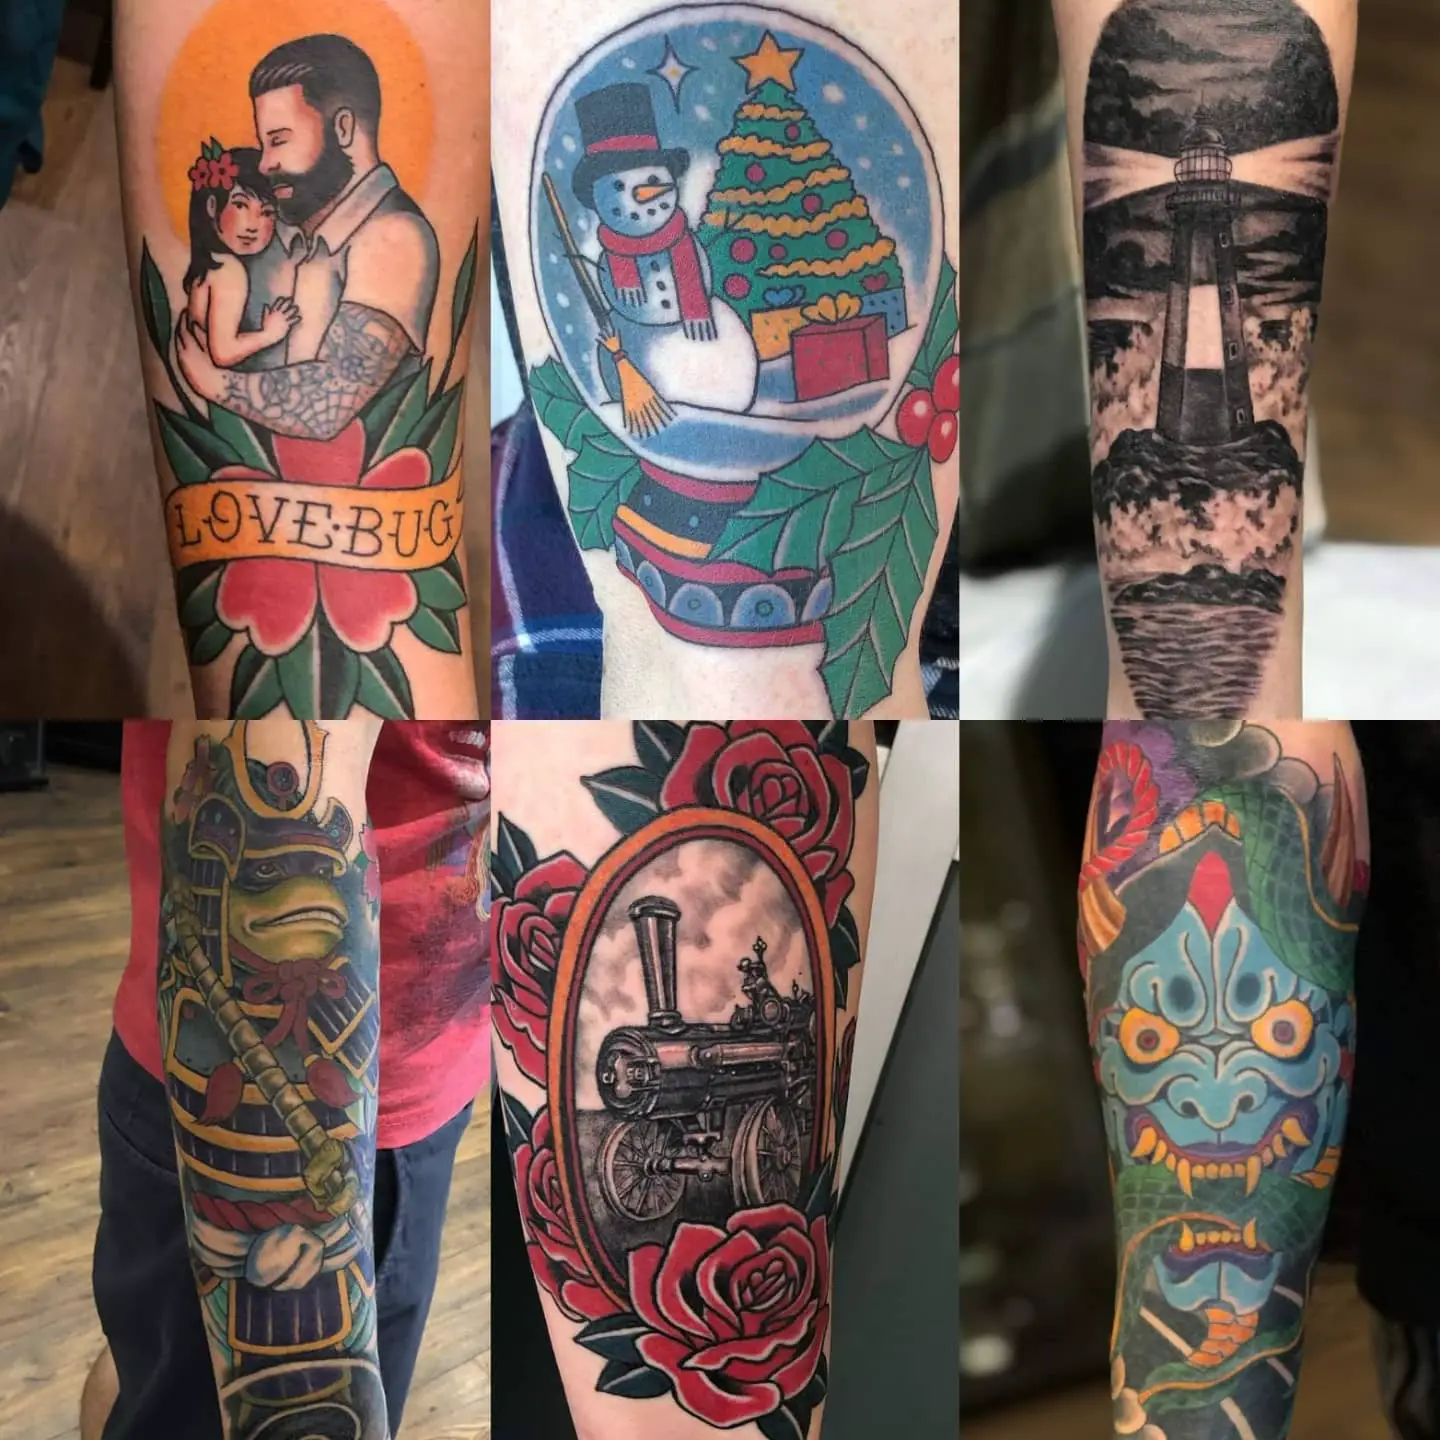 19 Most Renowned Tattoo Shops In Cincinnati With Award Winning Artists